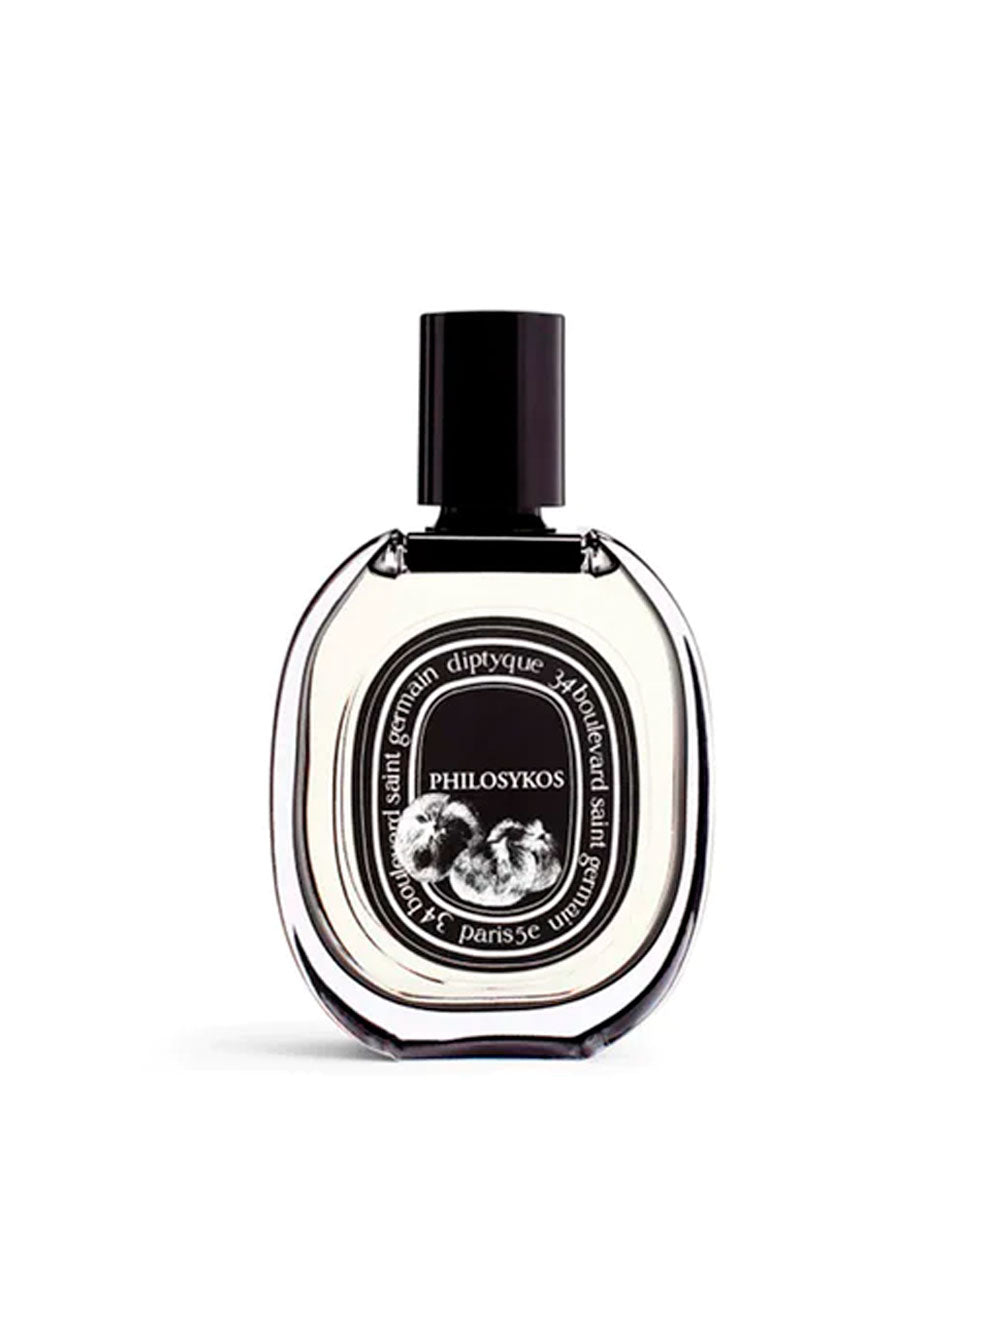 Perfume Philosykos 75ml